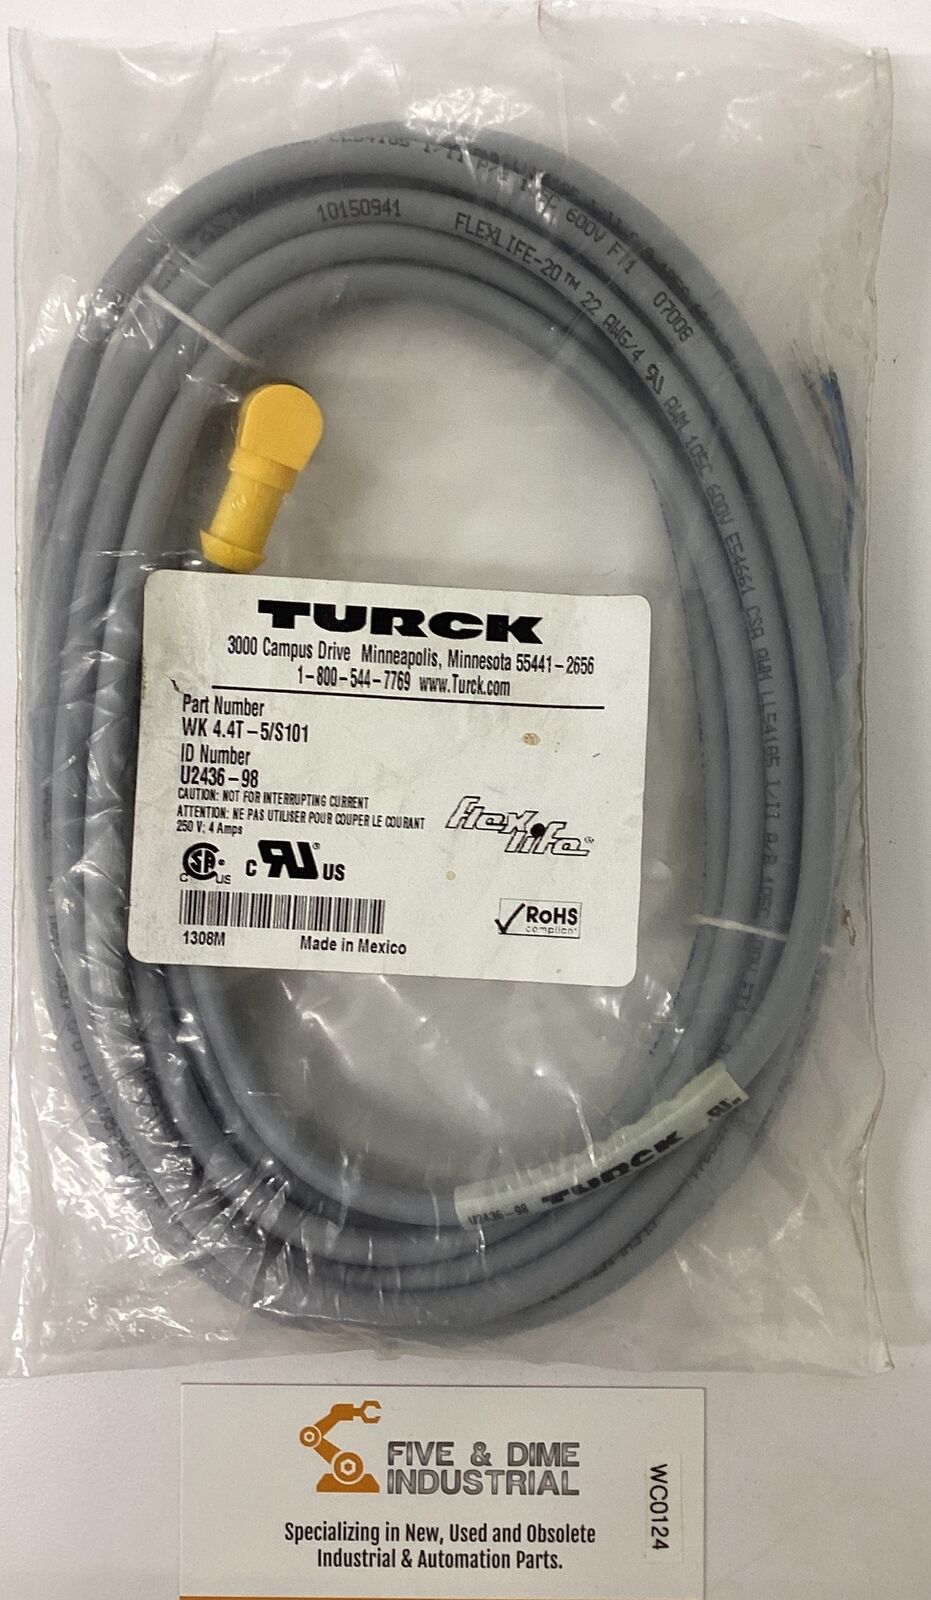 Turck wk-4.4T-5/s101  u2436-98 90 Degree 4 Pole Female Cable (GR210)